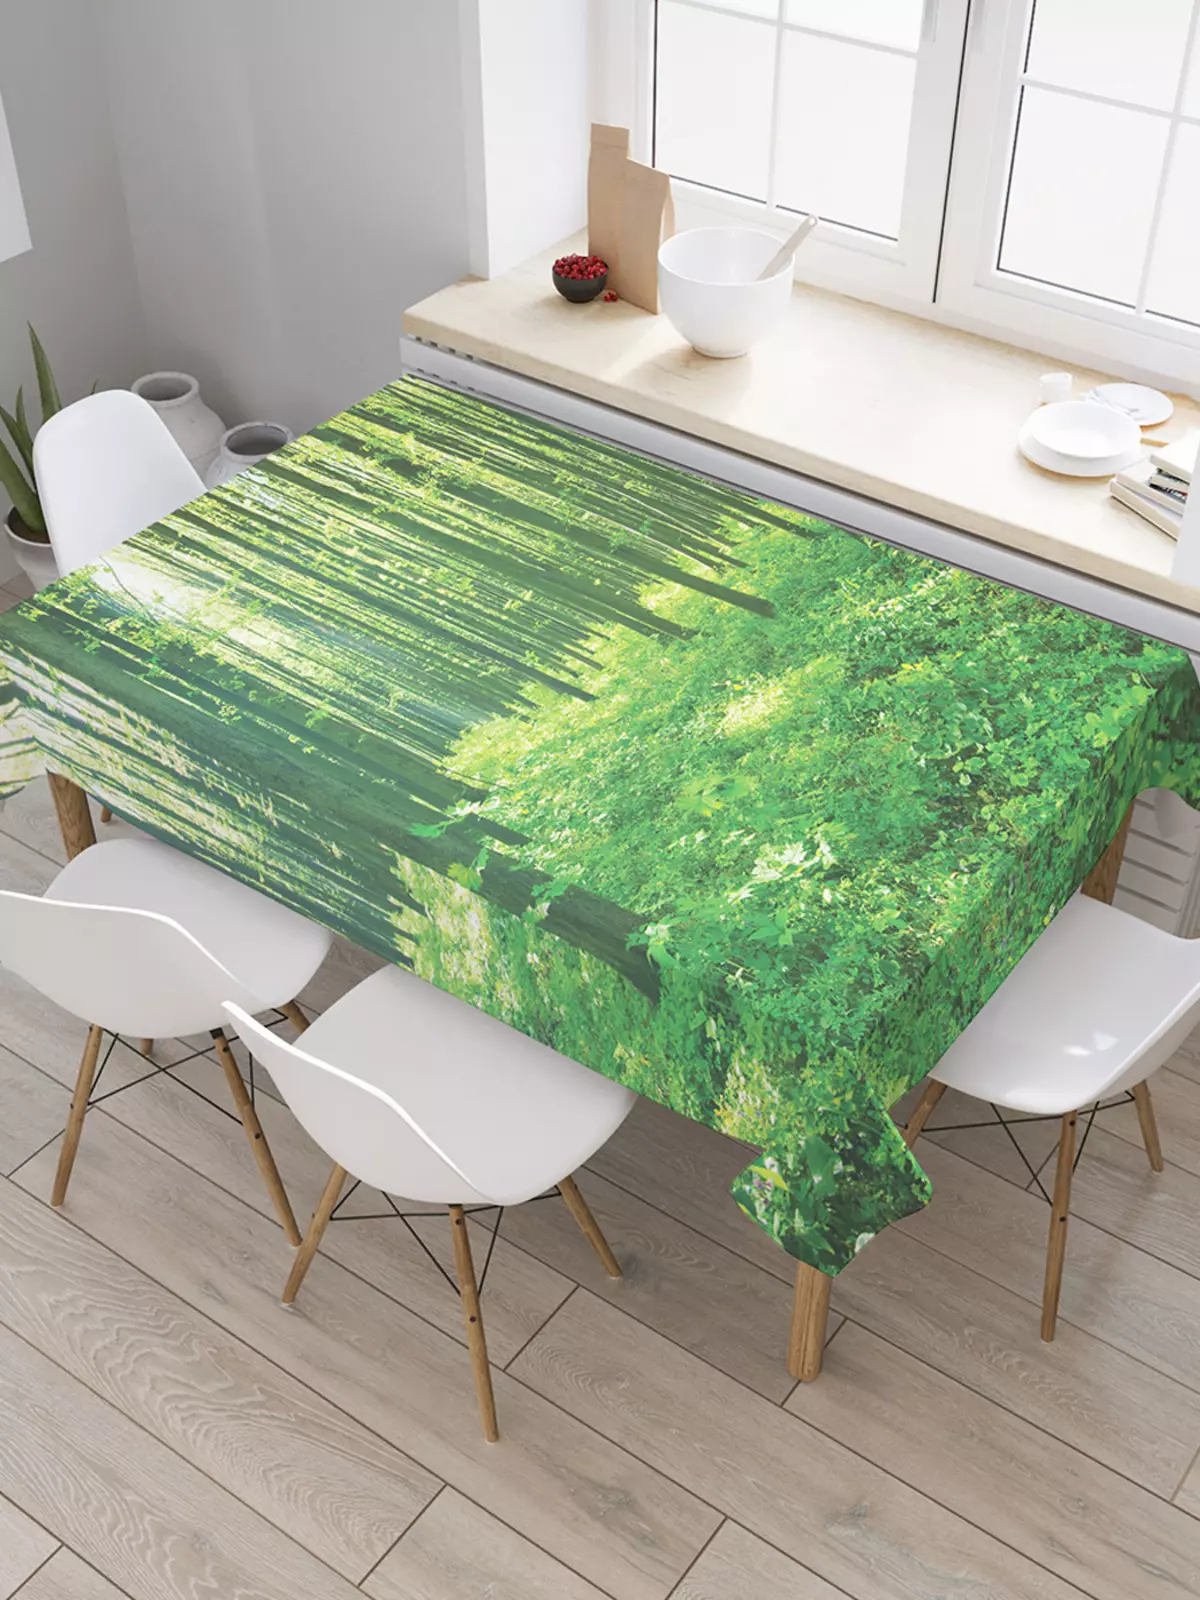 Taplak meja hijau: taplak meja monofonik hijau gelap di atas meja dan kelabu-hijau, pengaturan pengaturan. Linen dan Jacquard, taplak meja oval dan bundar di interior 21601_8